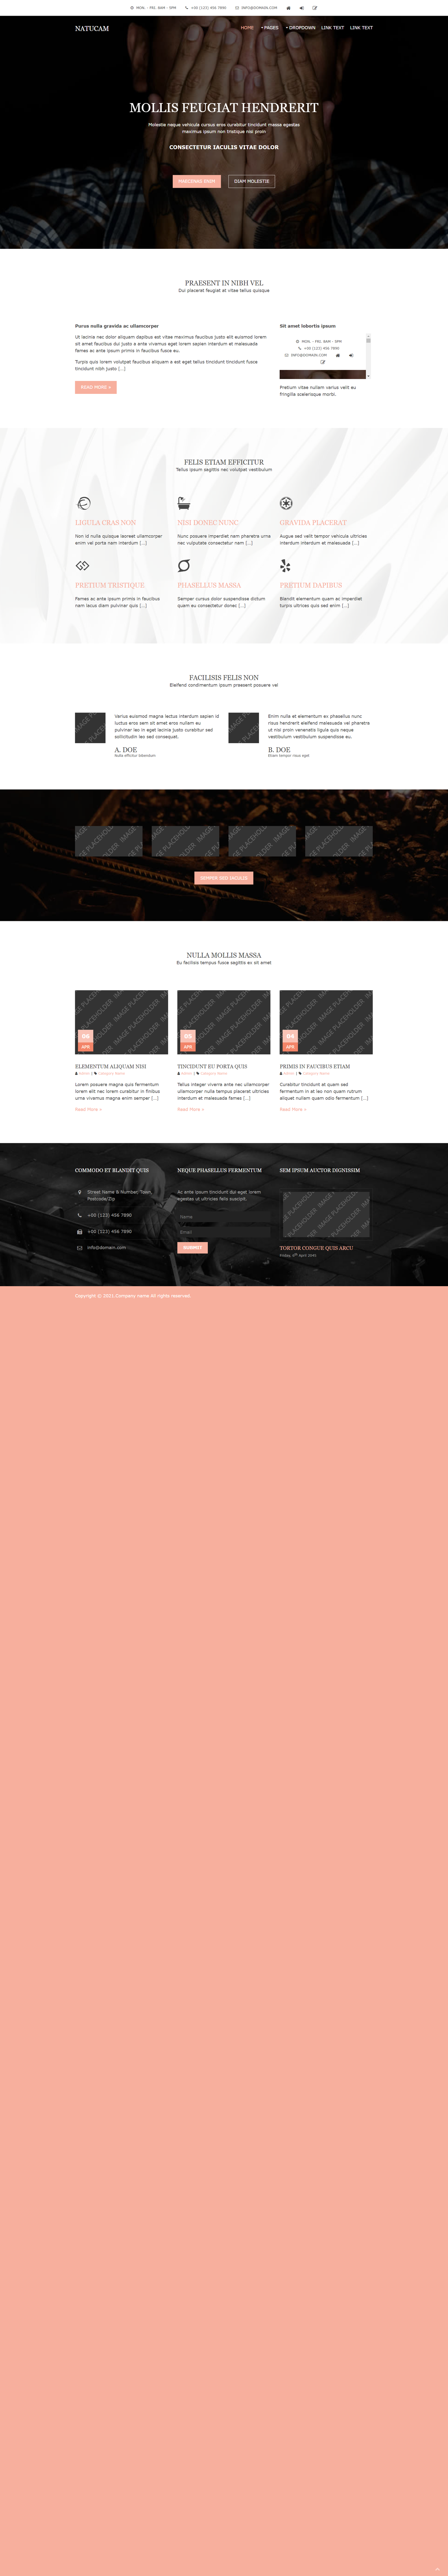 HTML5粉色宽屏样式贫困公益企业网站模板代码下载